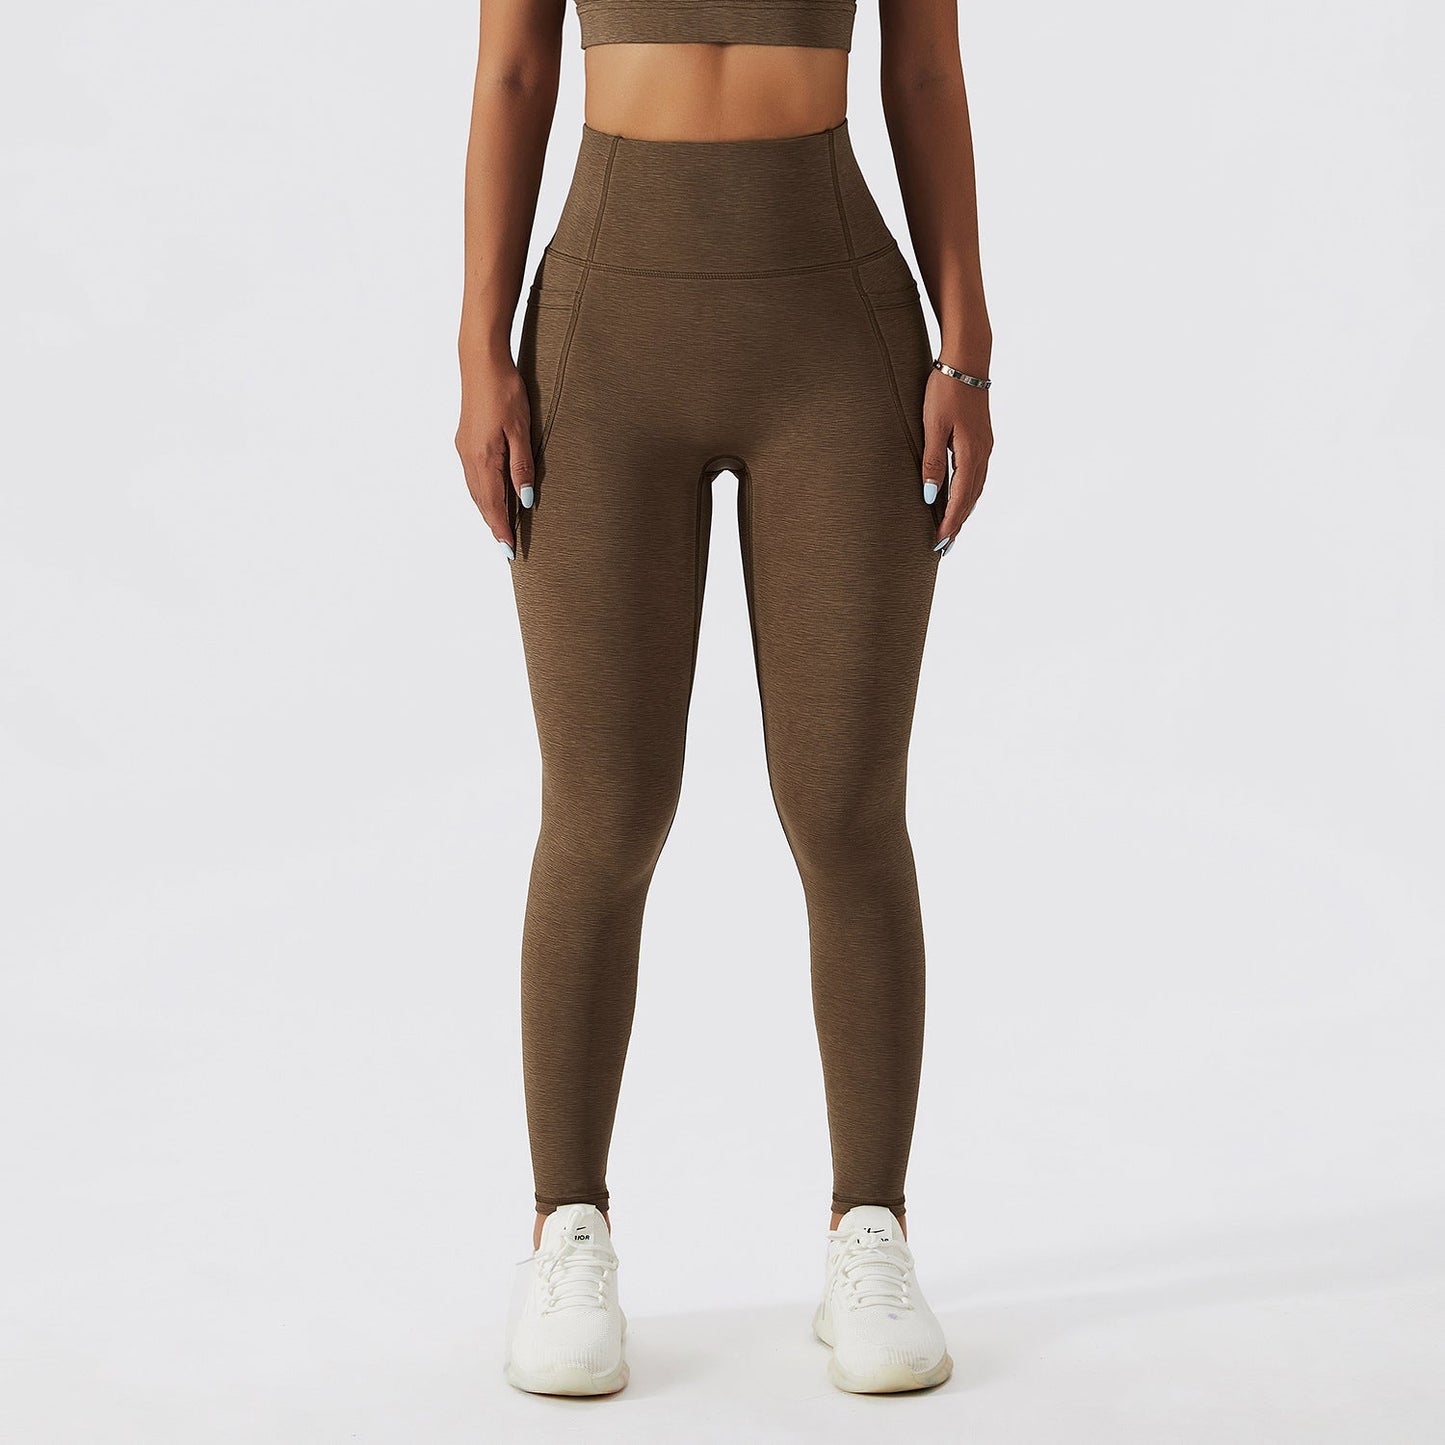 Sports Underwear Gather Back Yoga Bra Fitness Suit For WomenClothingCJTZ168071421UF